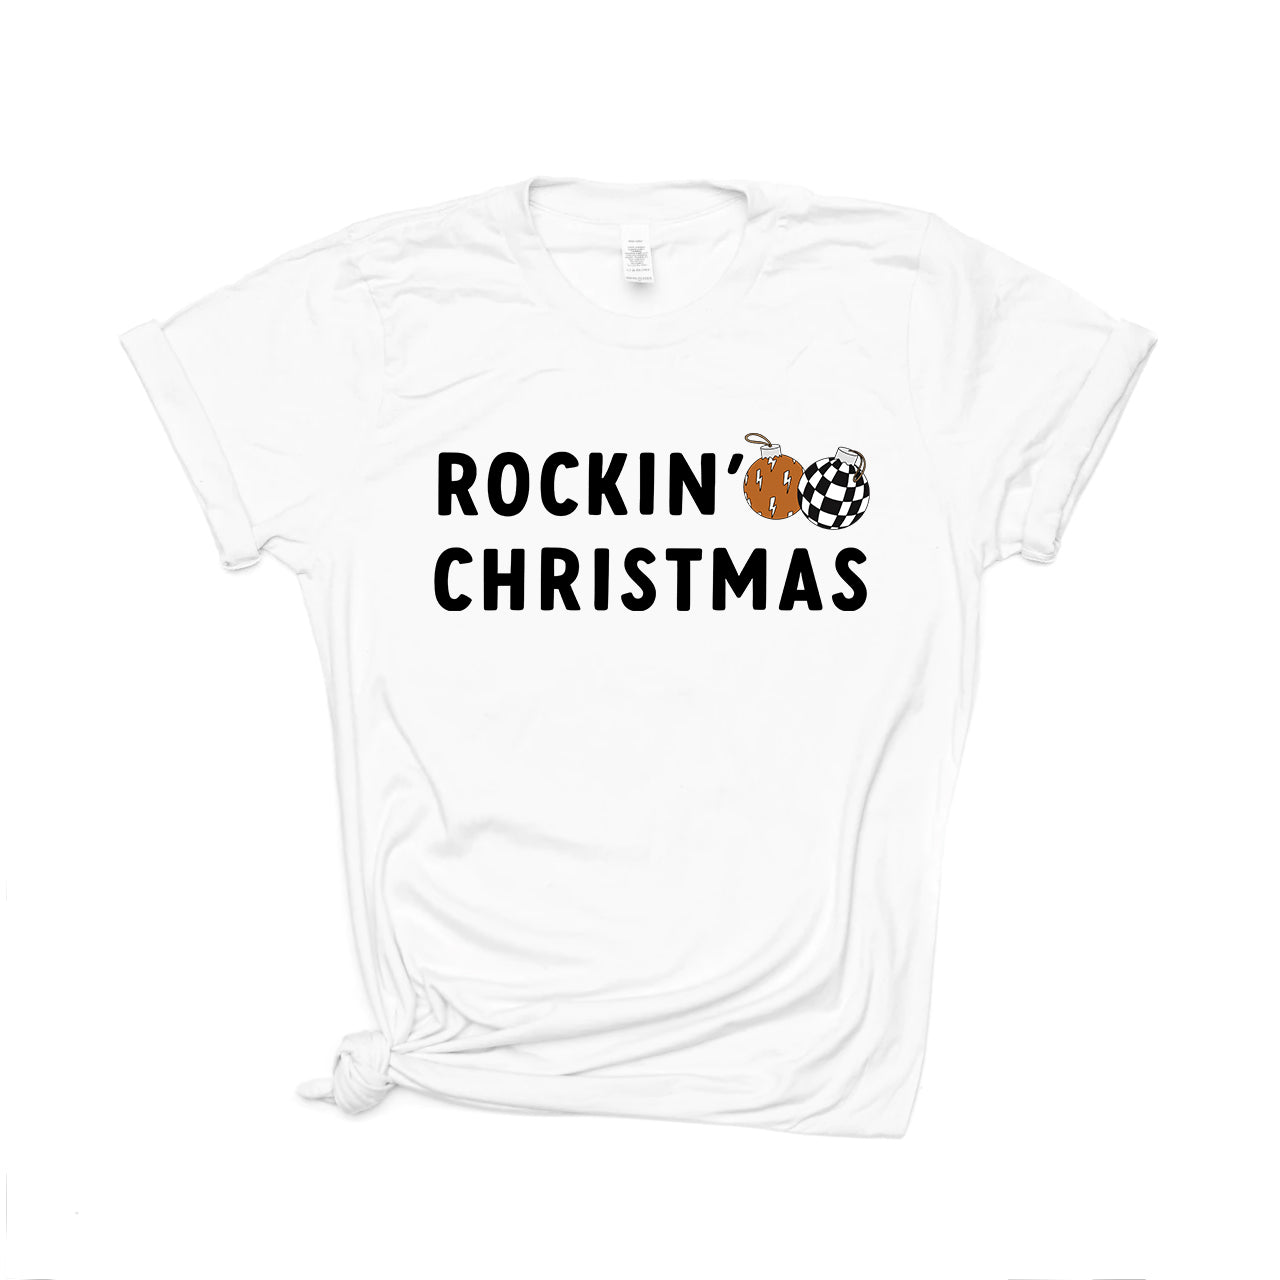 Rockin Christmas - Tee (White)